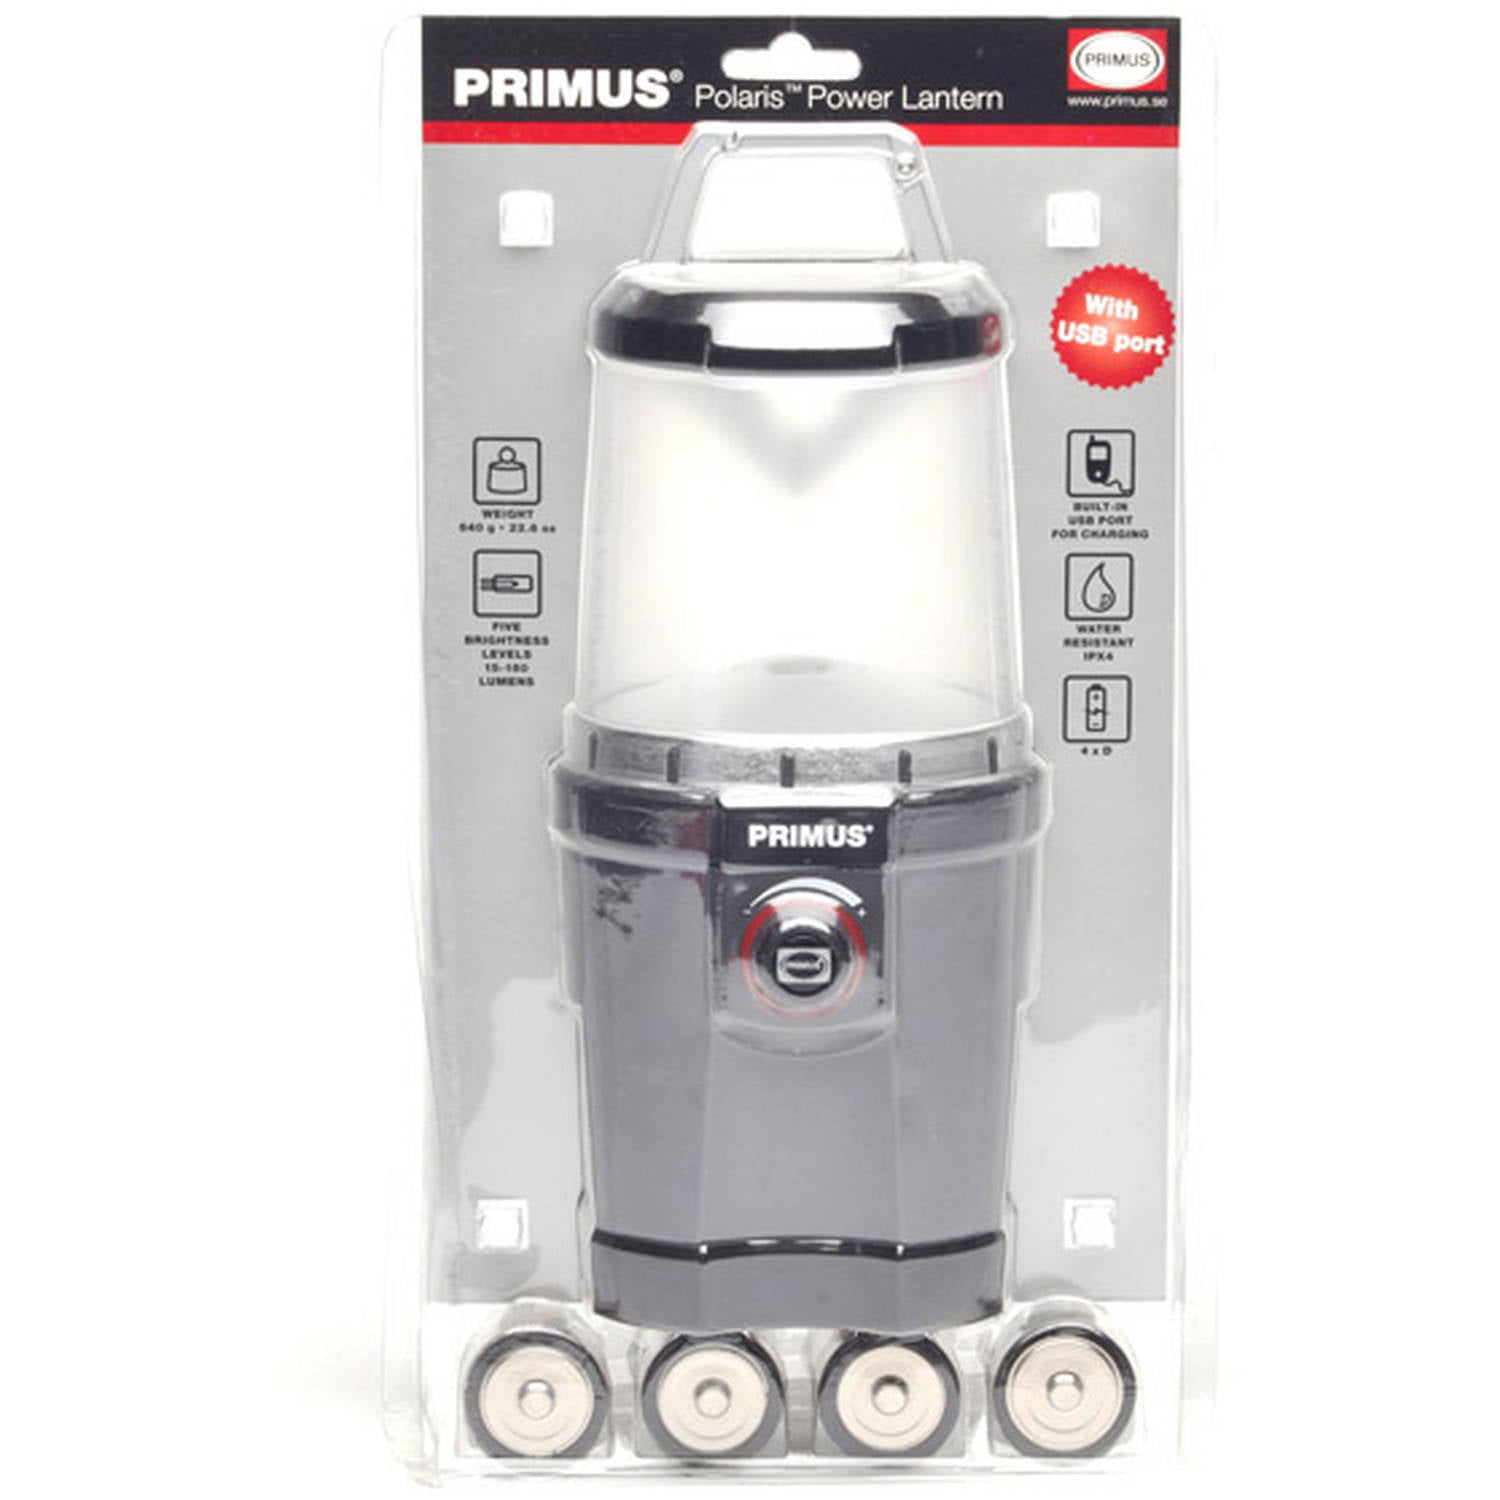 Primus Polaris Lantern with USB Recharge - Walmart.com